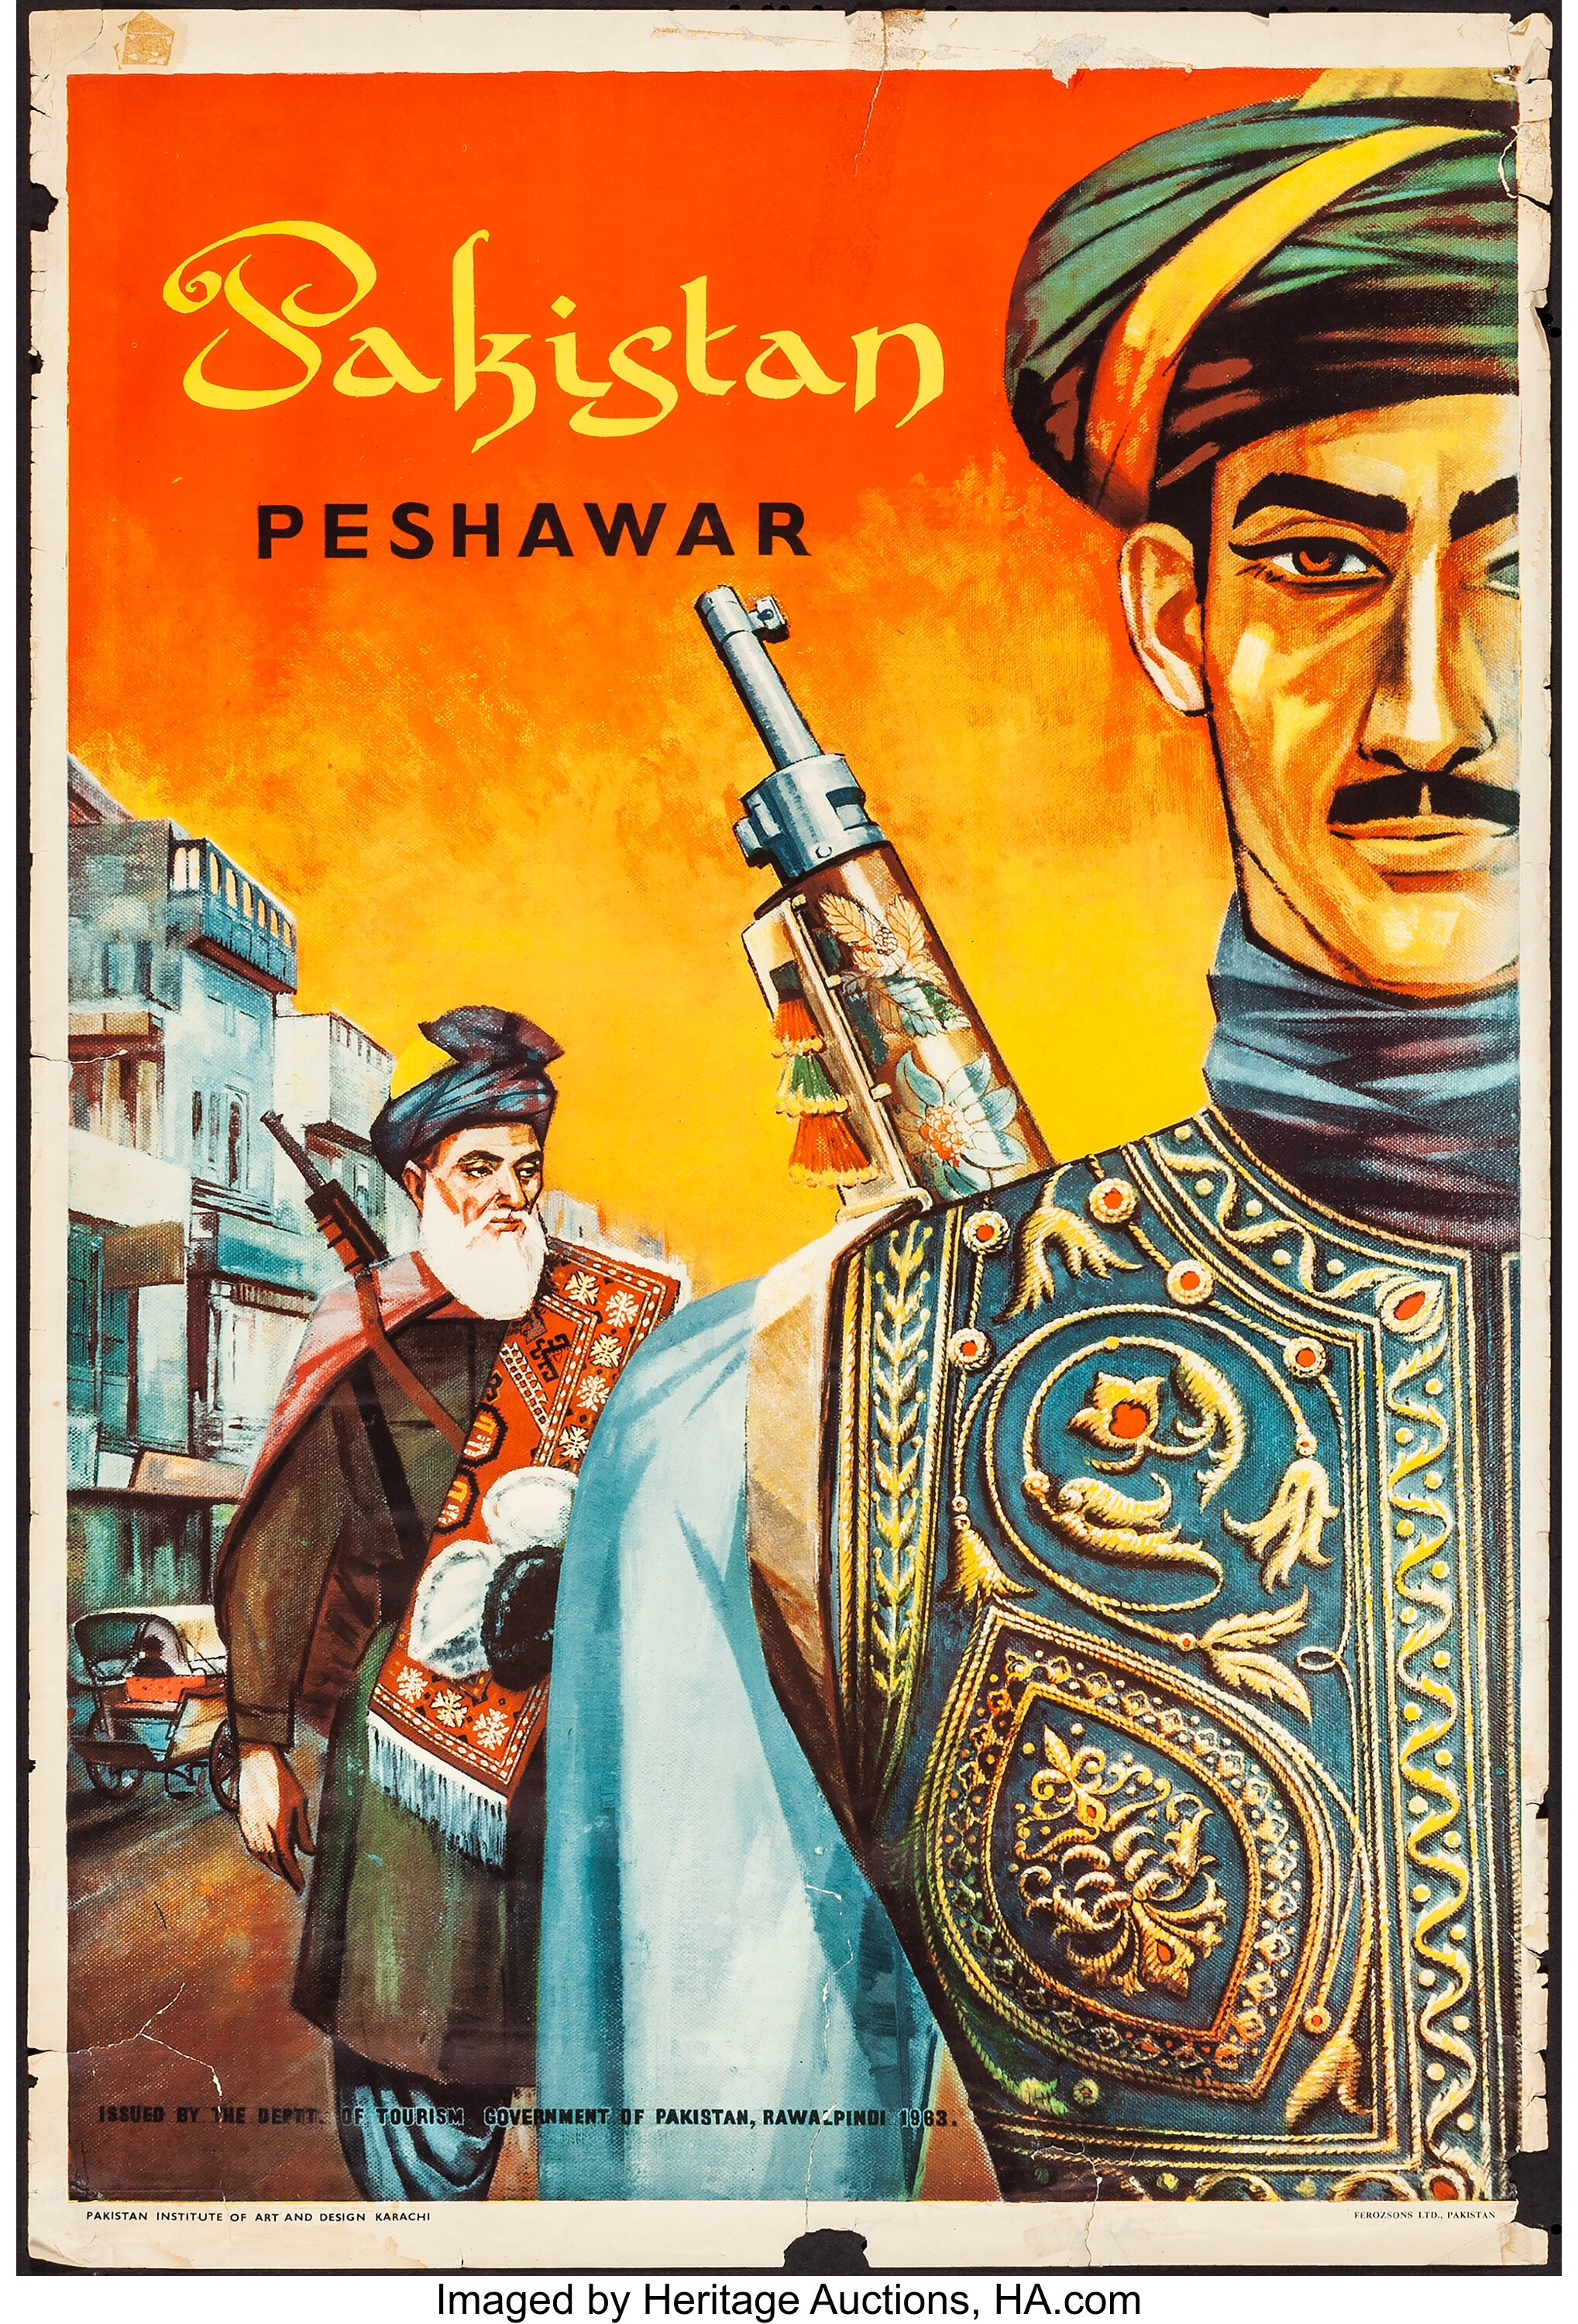 Nostalgic art: Lost in the Hues of Peshawar